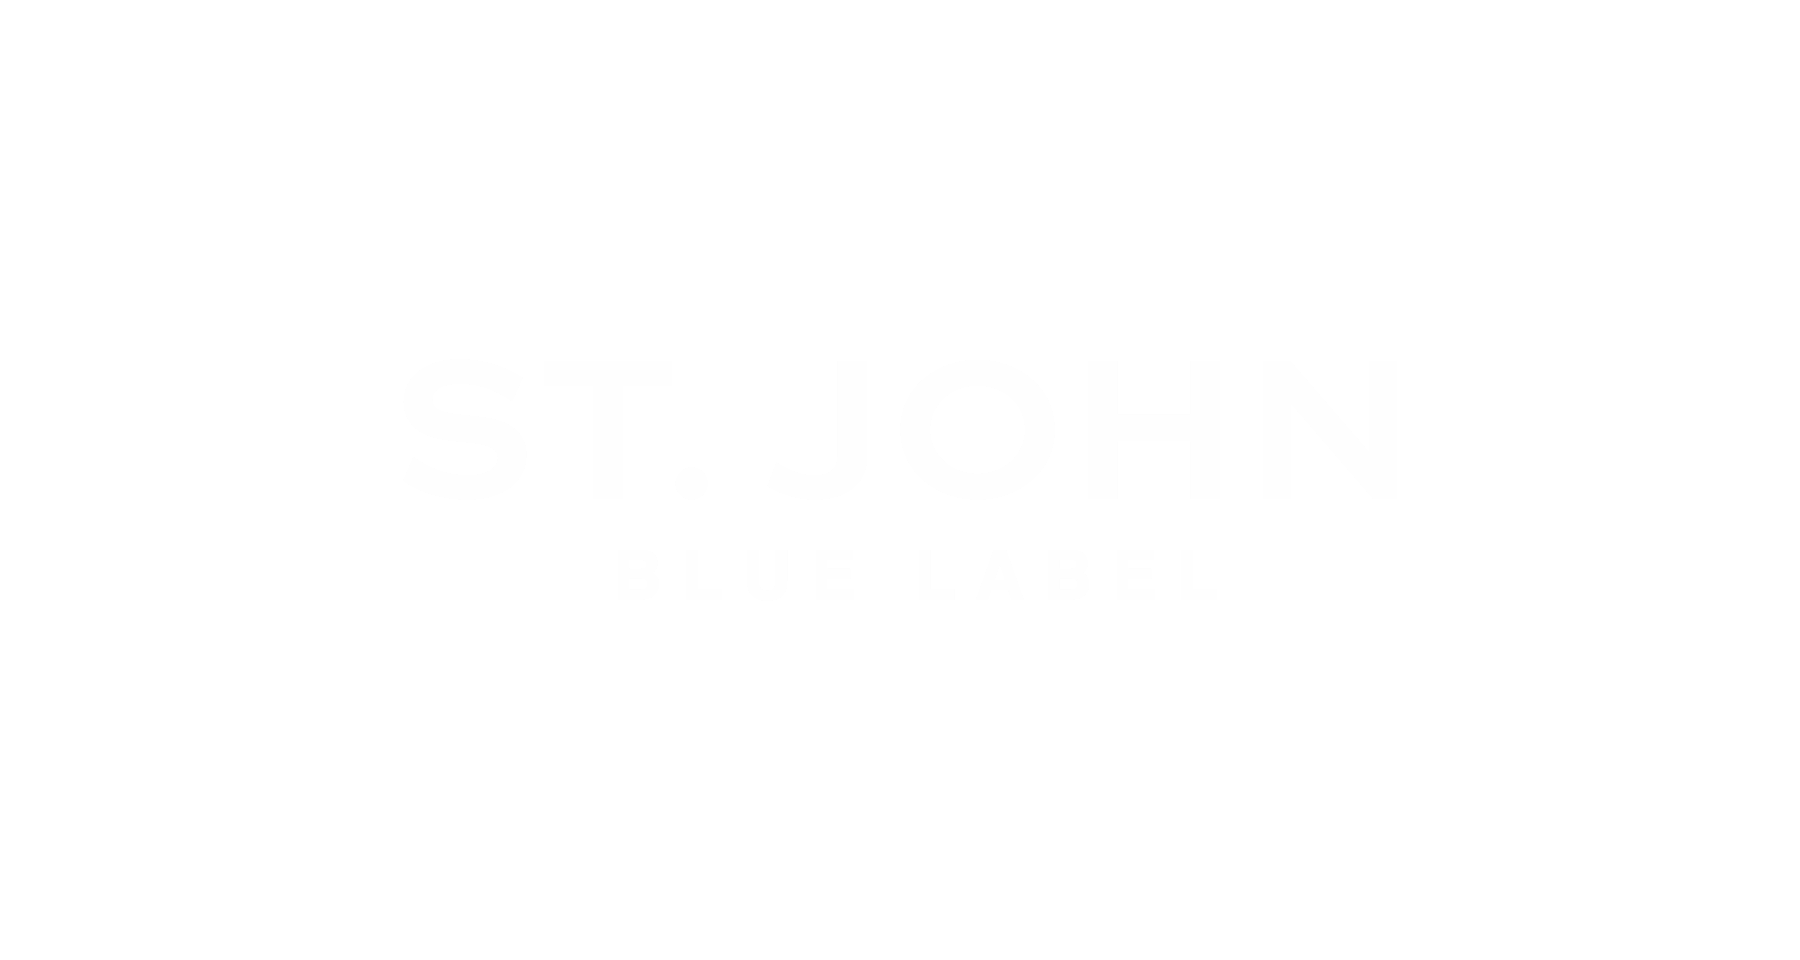 ST. JOHN BLUE LABEL